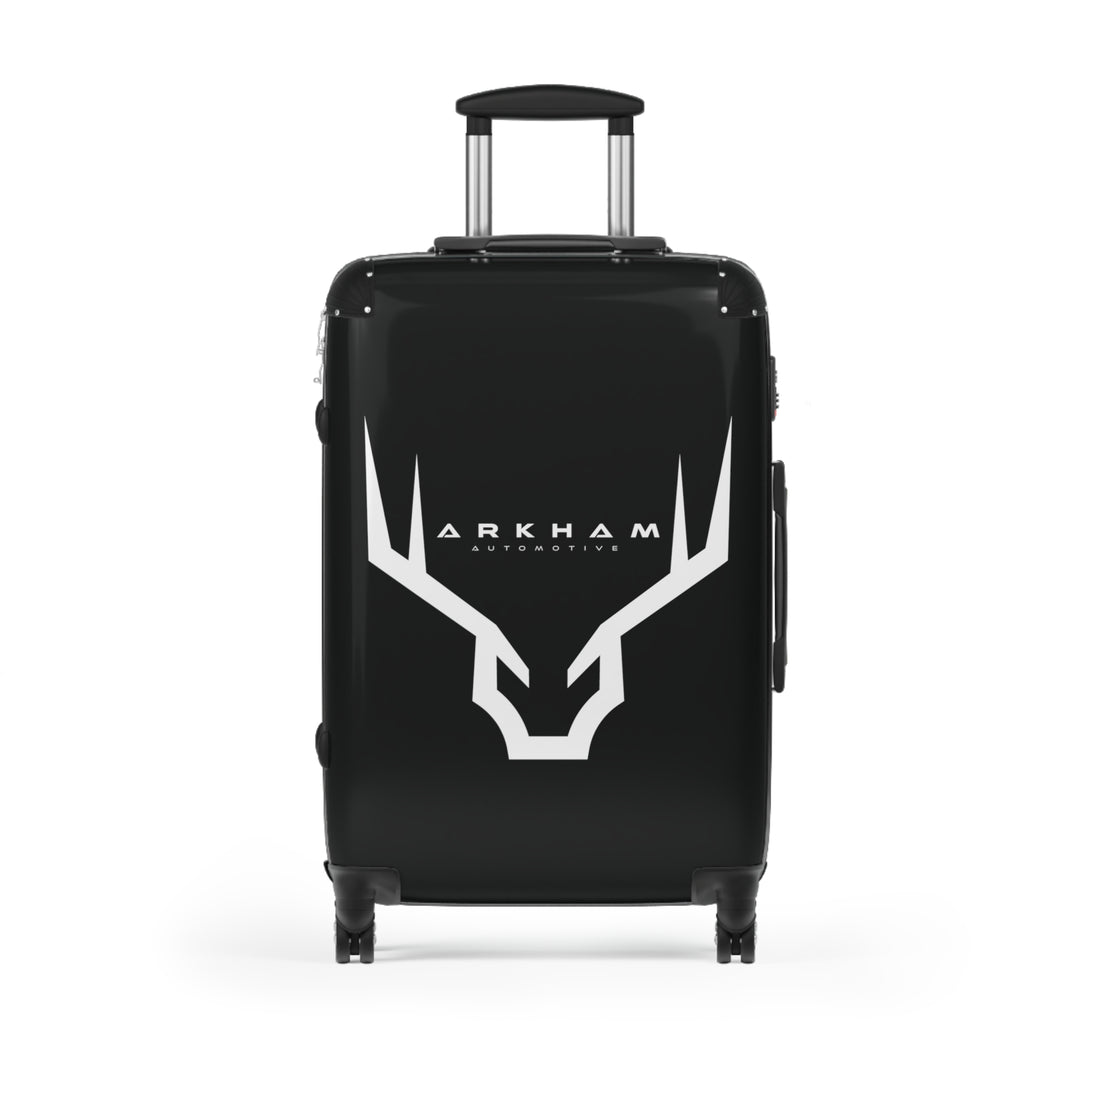 Arkham Official Travel Suitcase